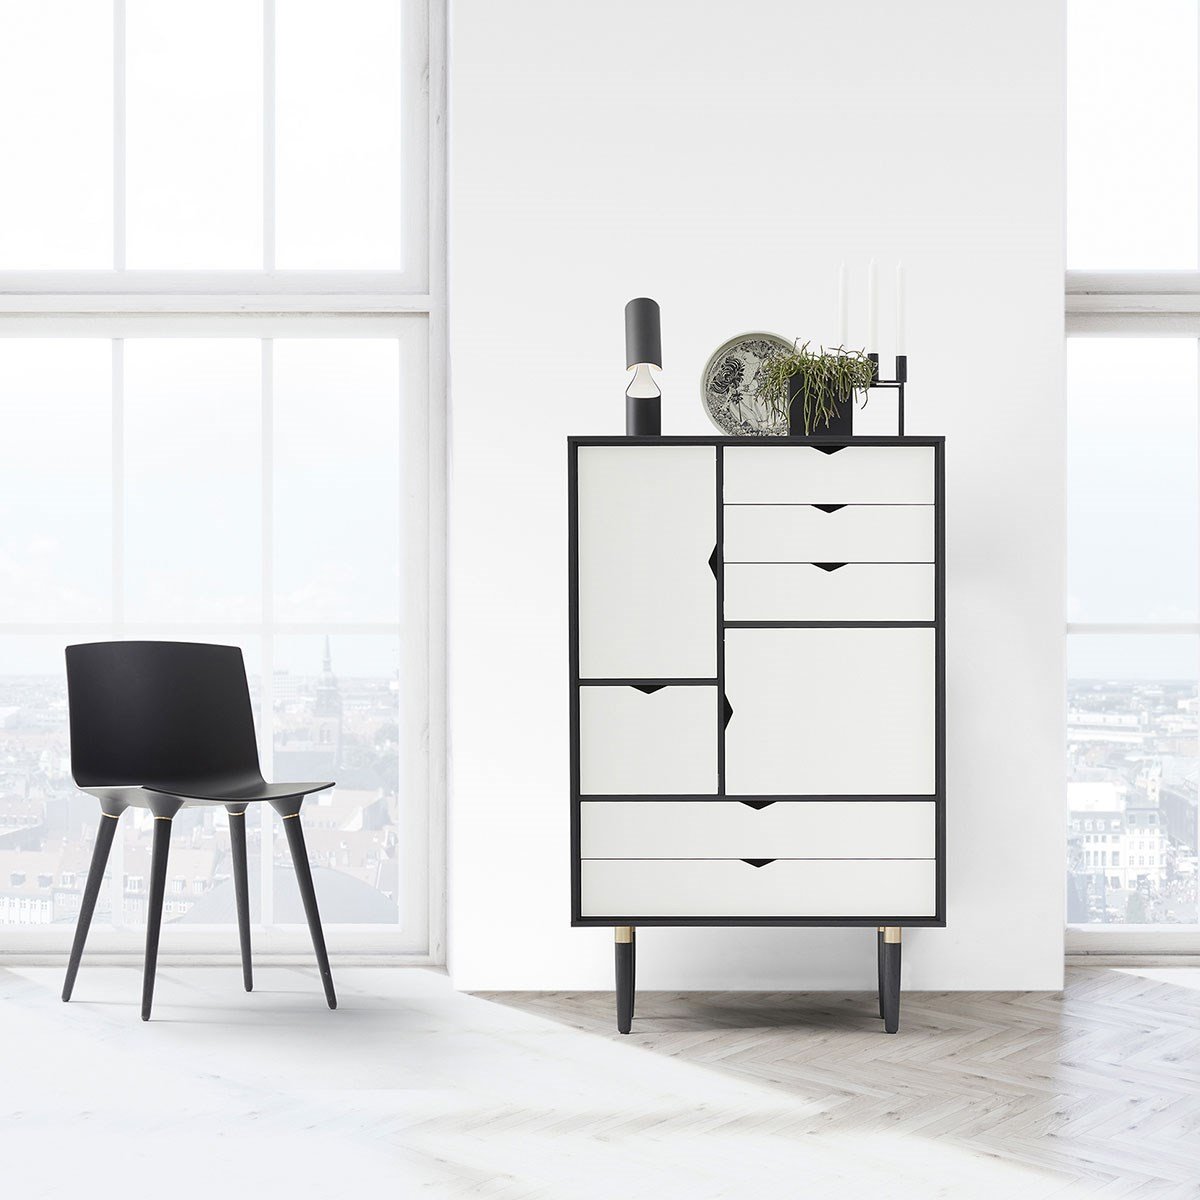 Annersen Furniture S5 Cabinet noir, avant blanc